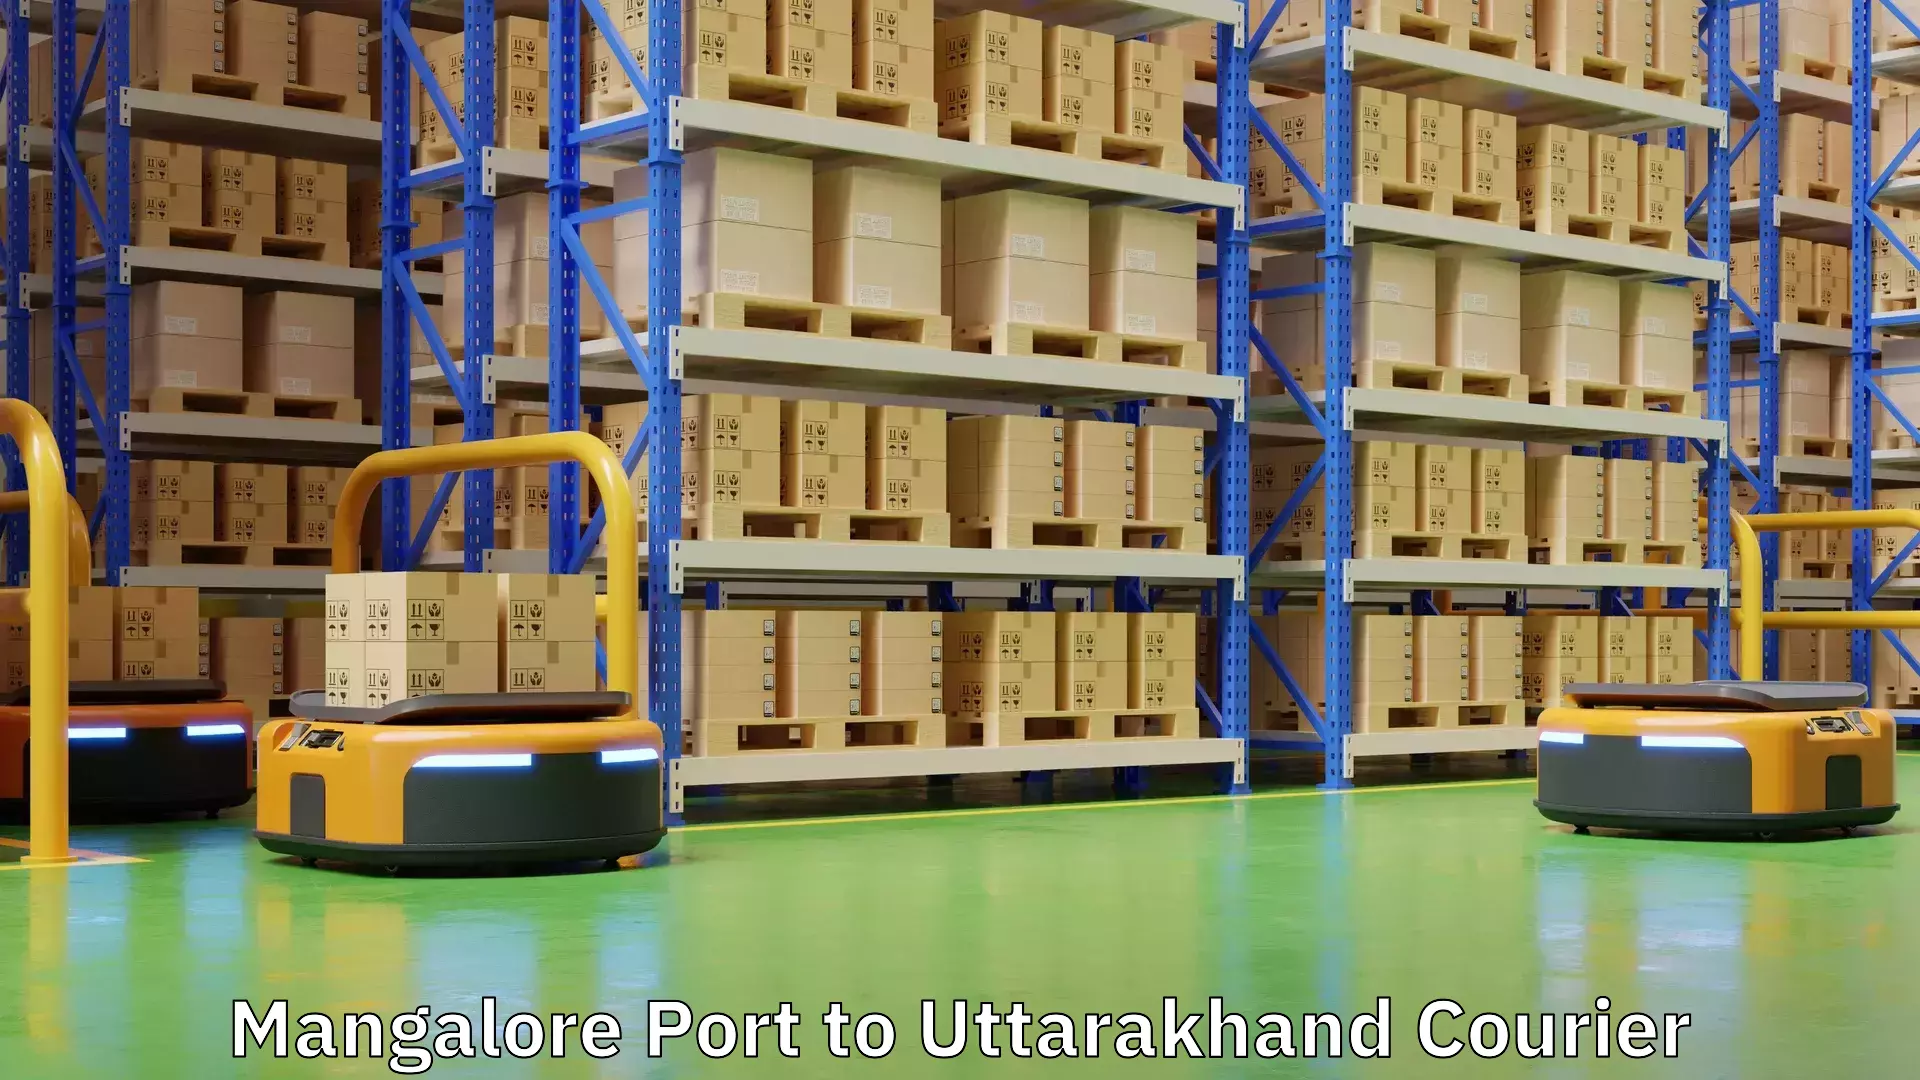 Speedy delivery service Mangalore Port to Uttarakhand